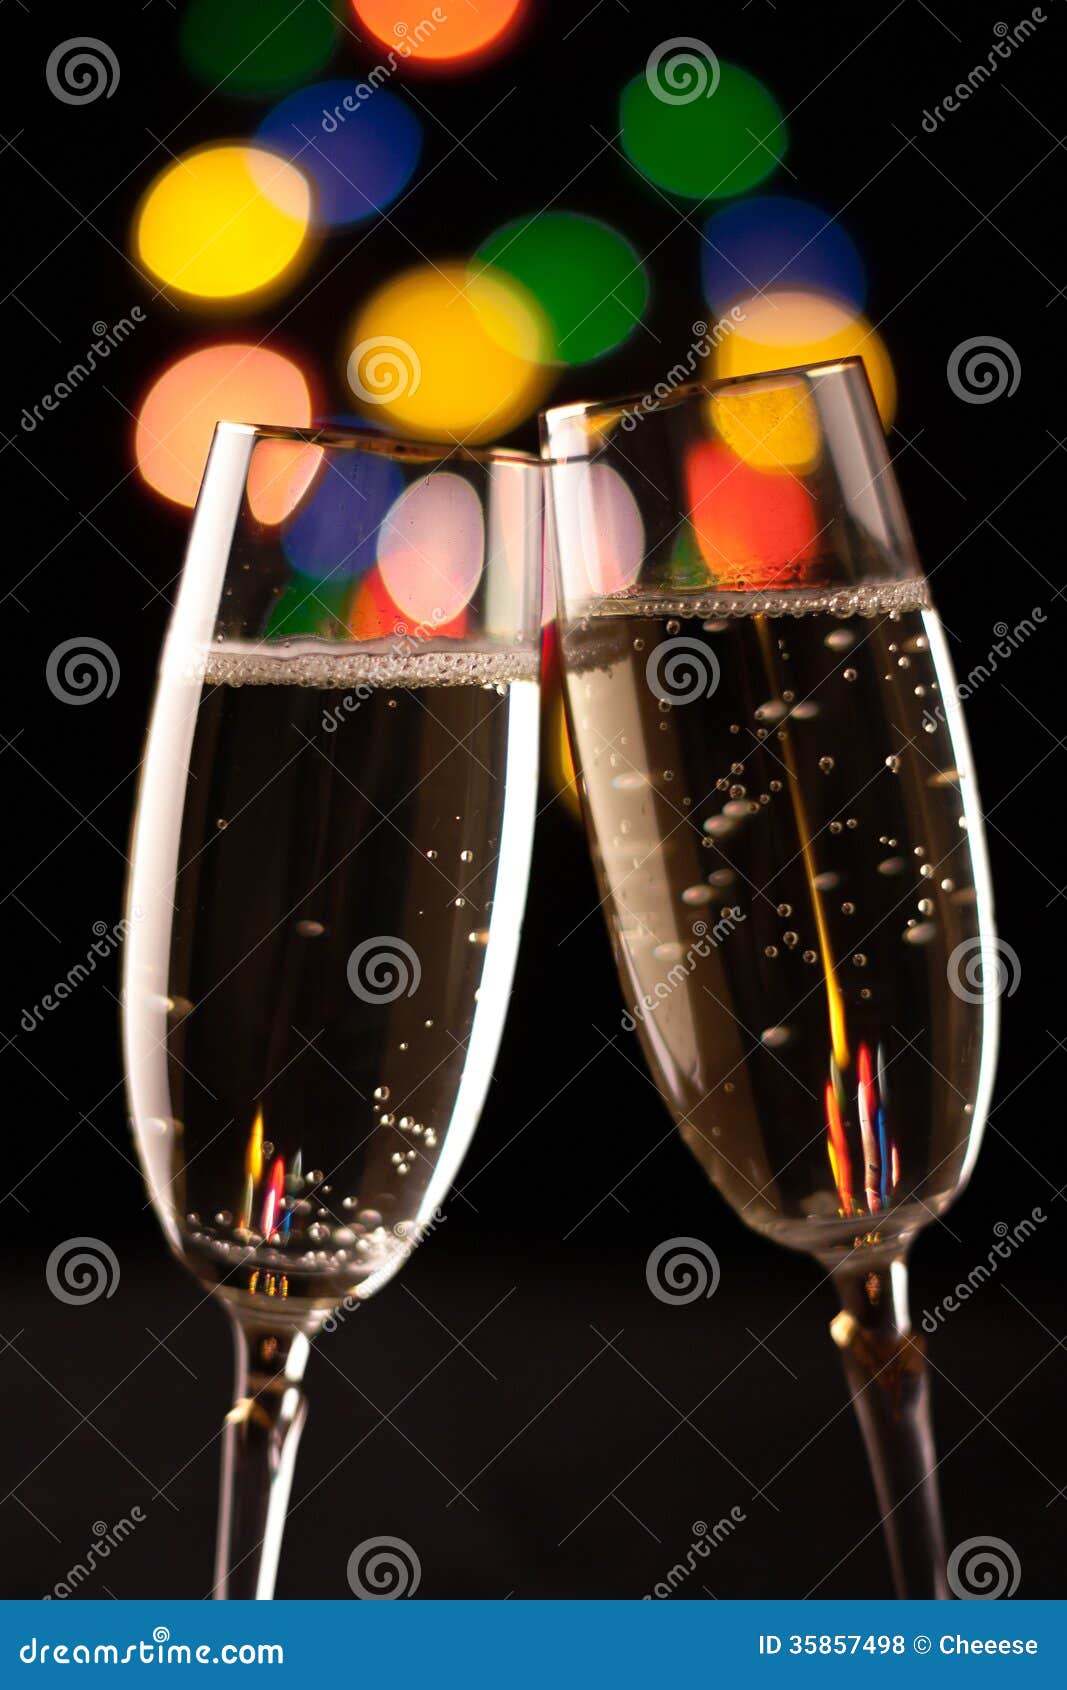 https://thumbs.dreamstime.com/z/two-glasses-champagne-toasting-against-bokeh-lights-background-35857498.jpg